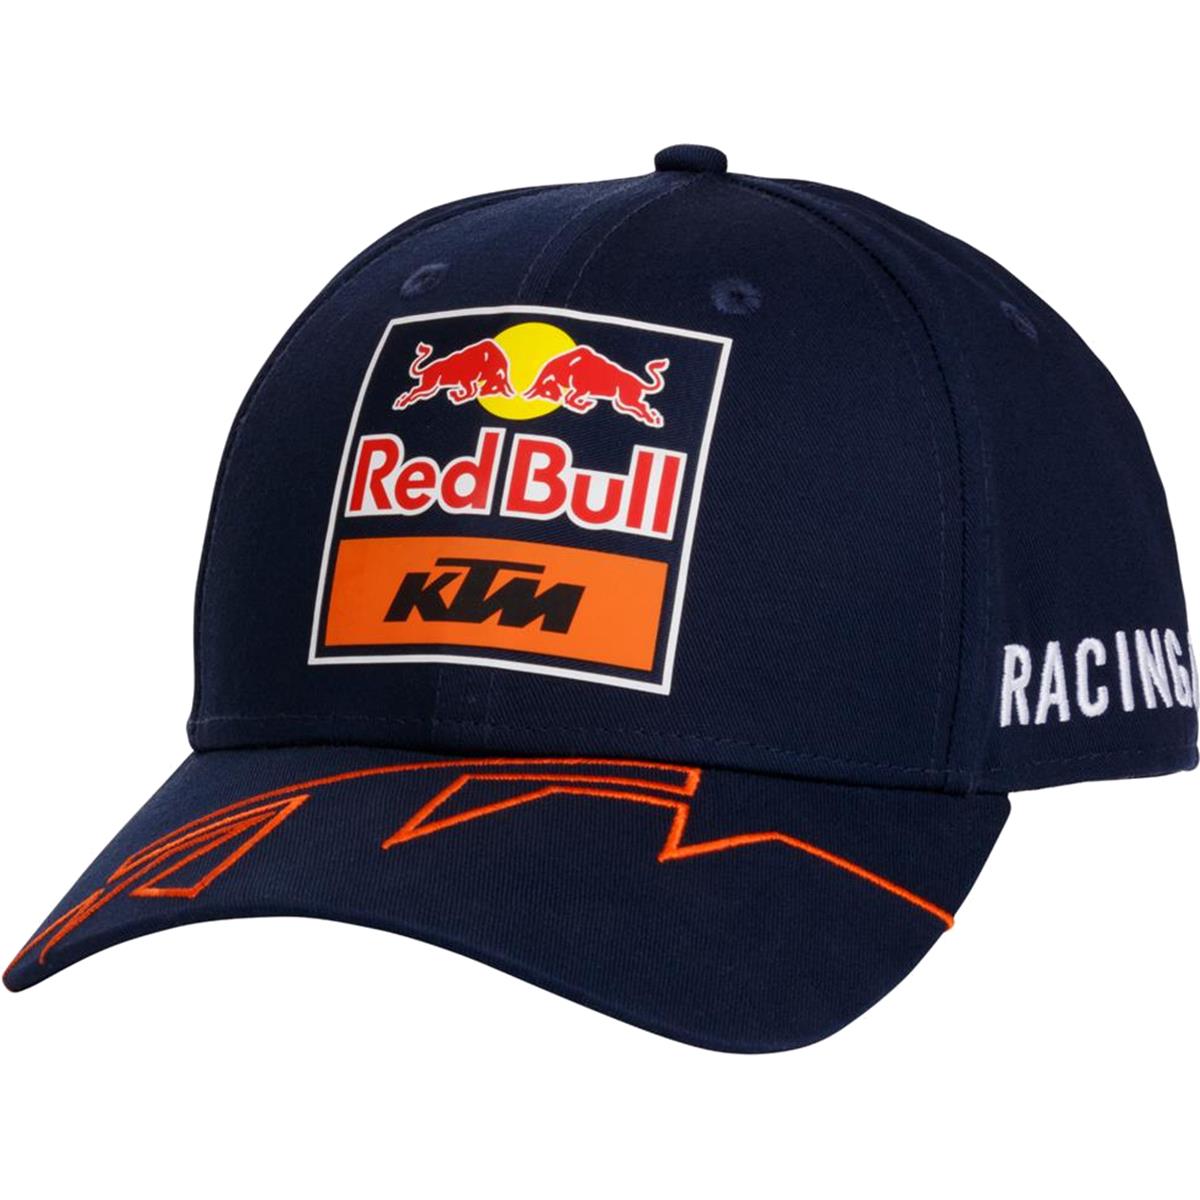 Red Bull Strapback Cap KTM New Era OTL Navy/Orange